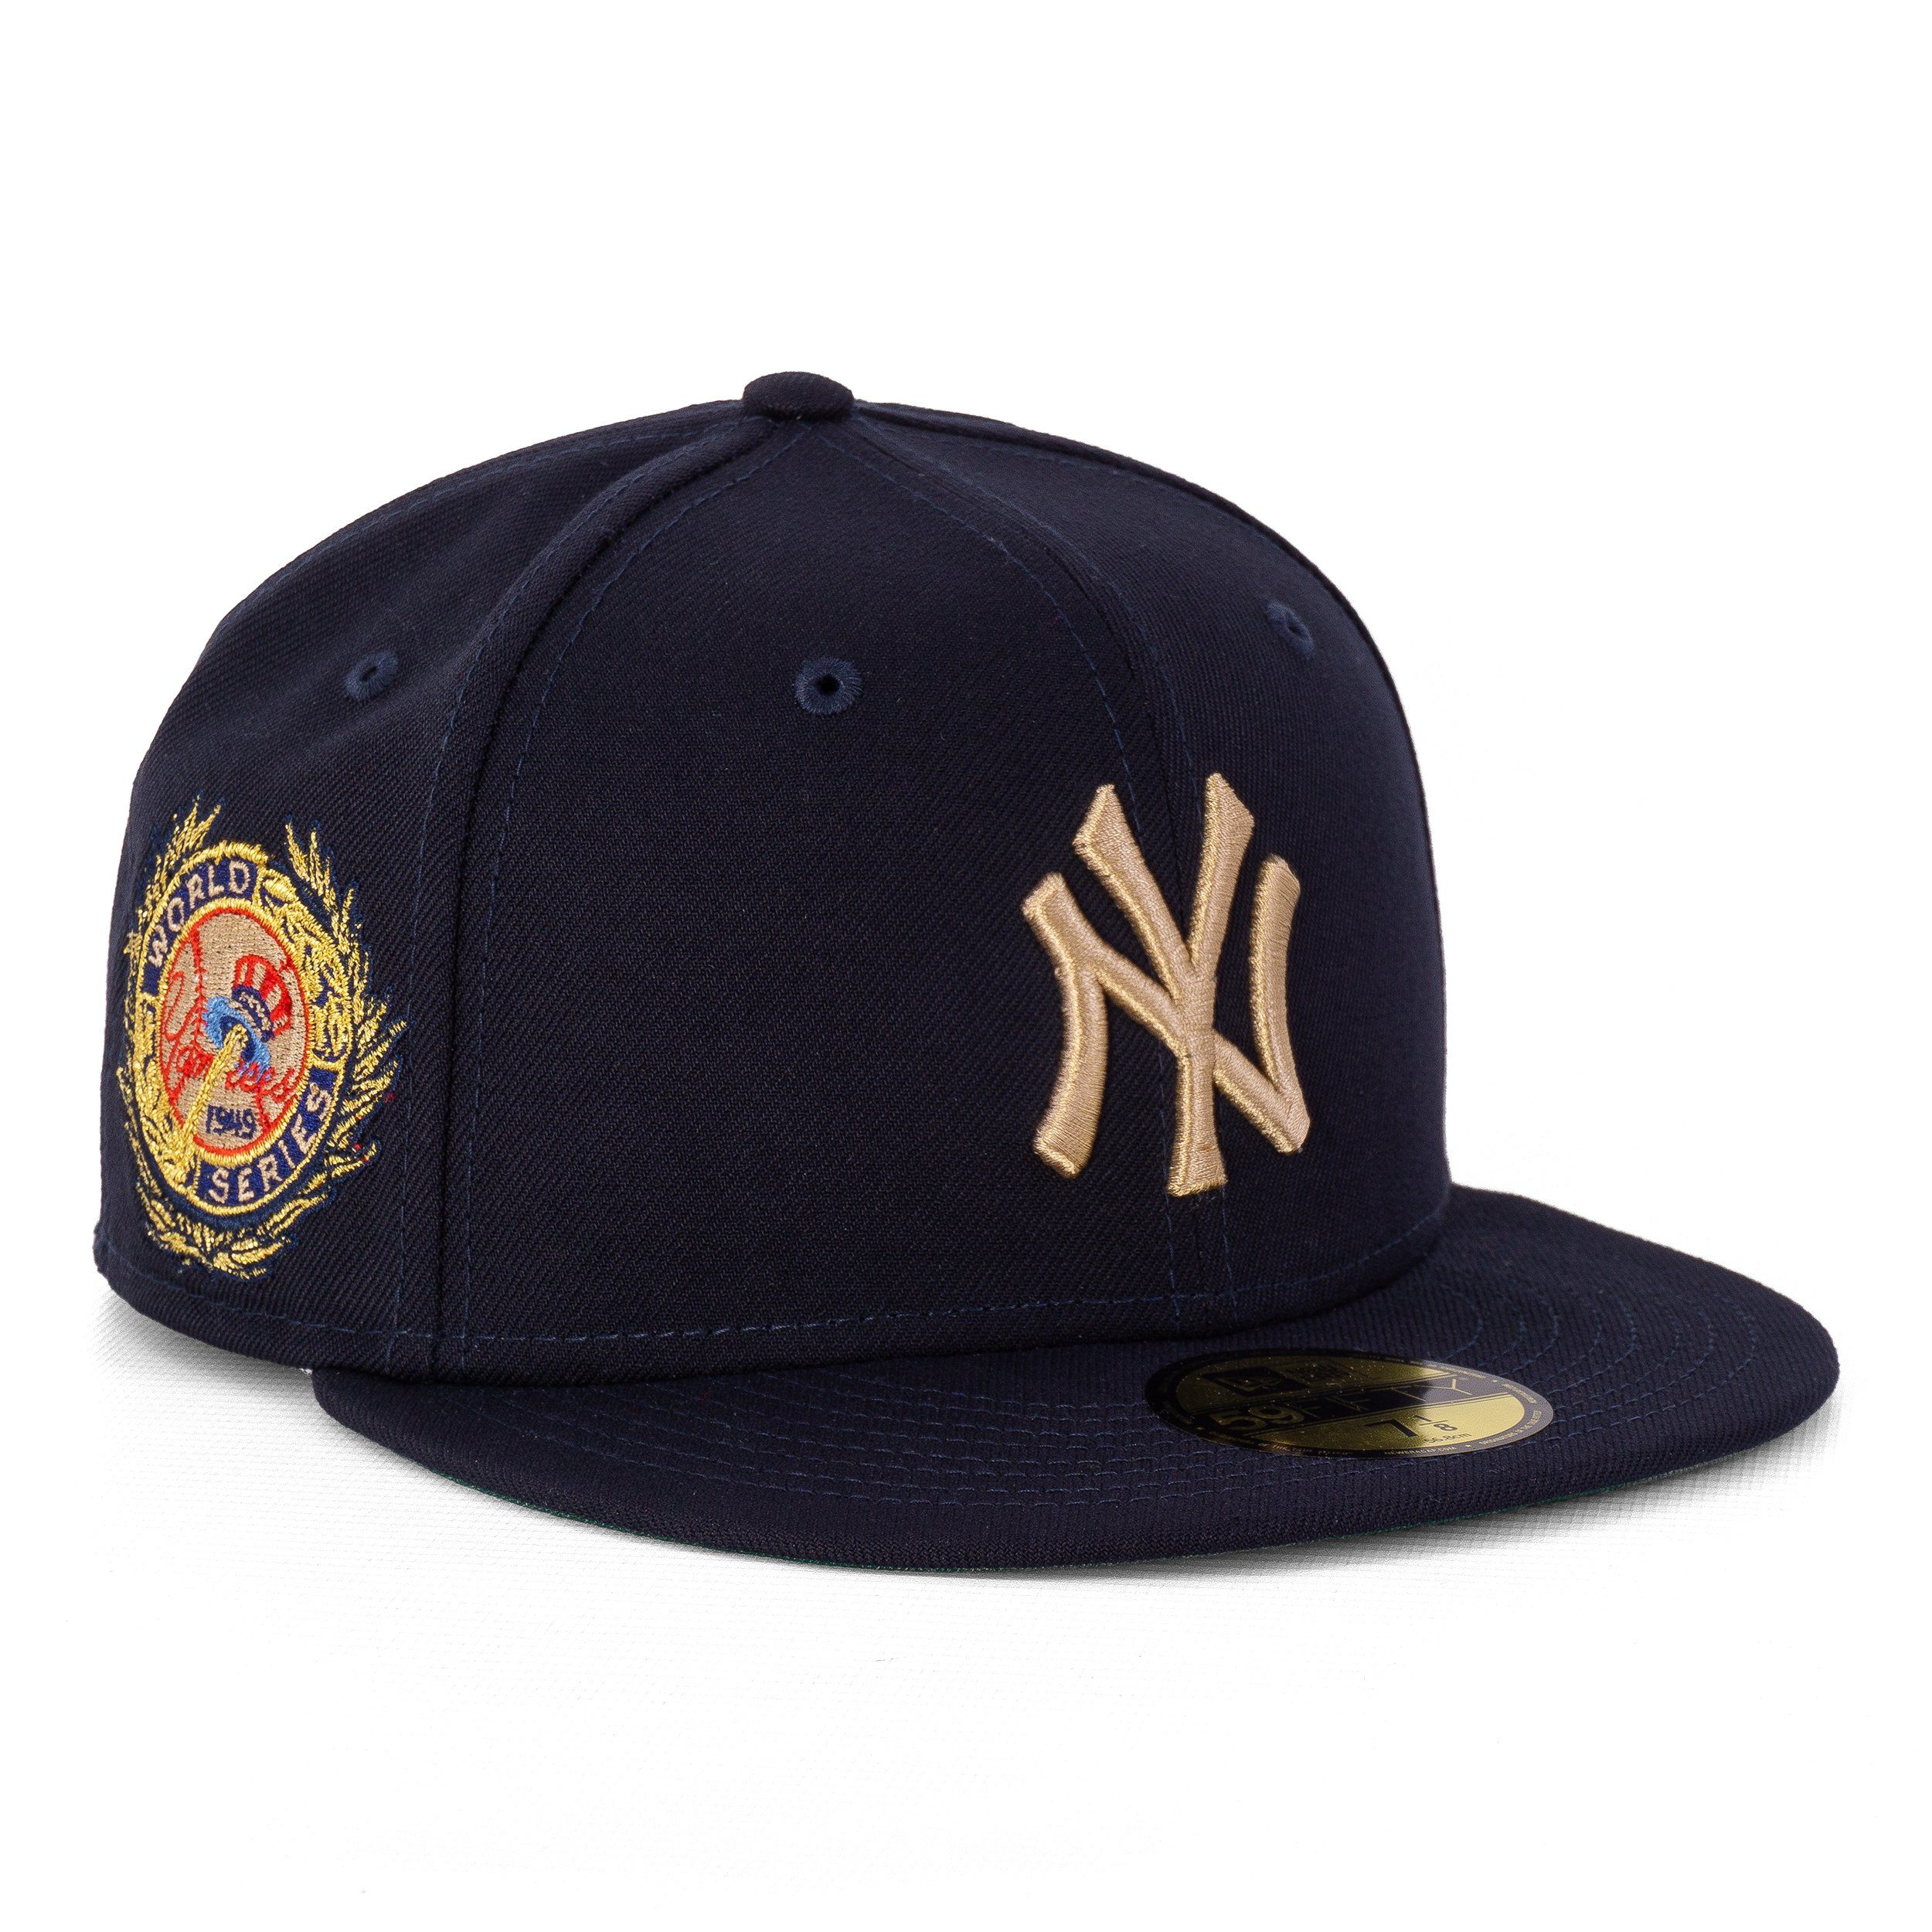 New York navy Era Cap New New Lauel Baseball Cap Sidepatch Era Yankees Fitted (1-St)